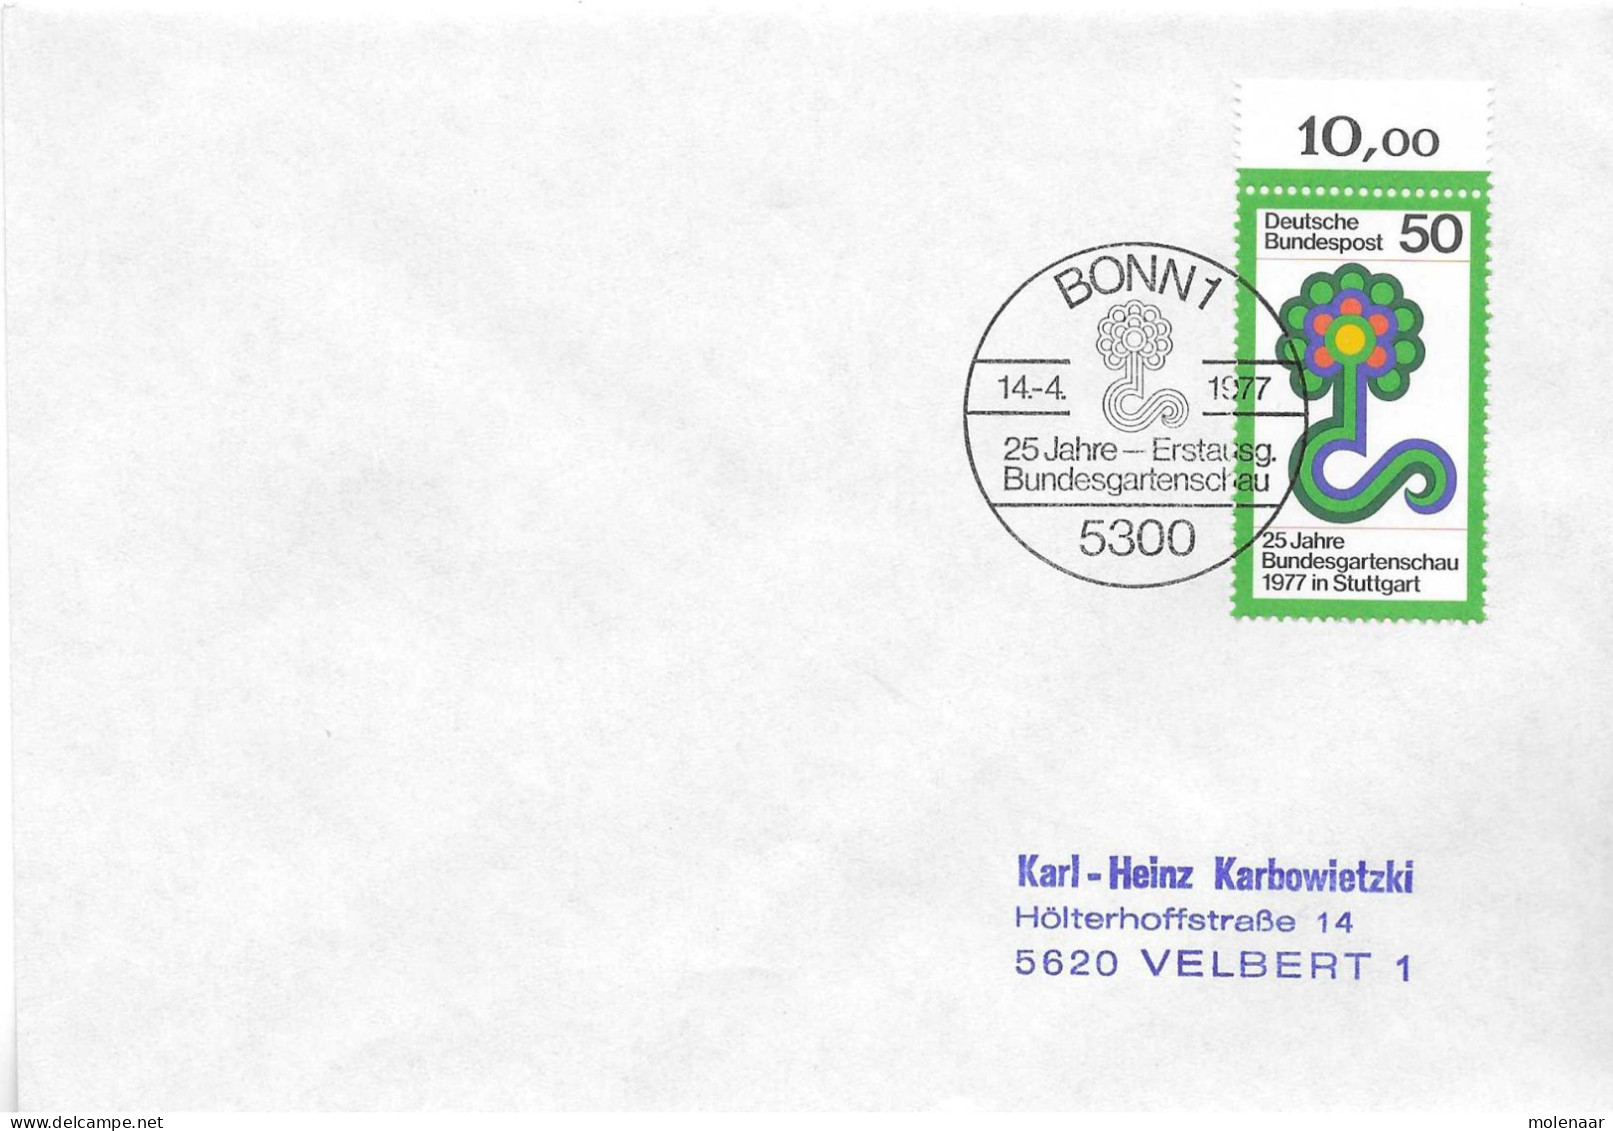 Postzegels > Europa > Duitsland > West-Duitsland > 1970-1979 > Brief Met No. 927 (17353) - Covers & Documents